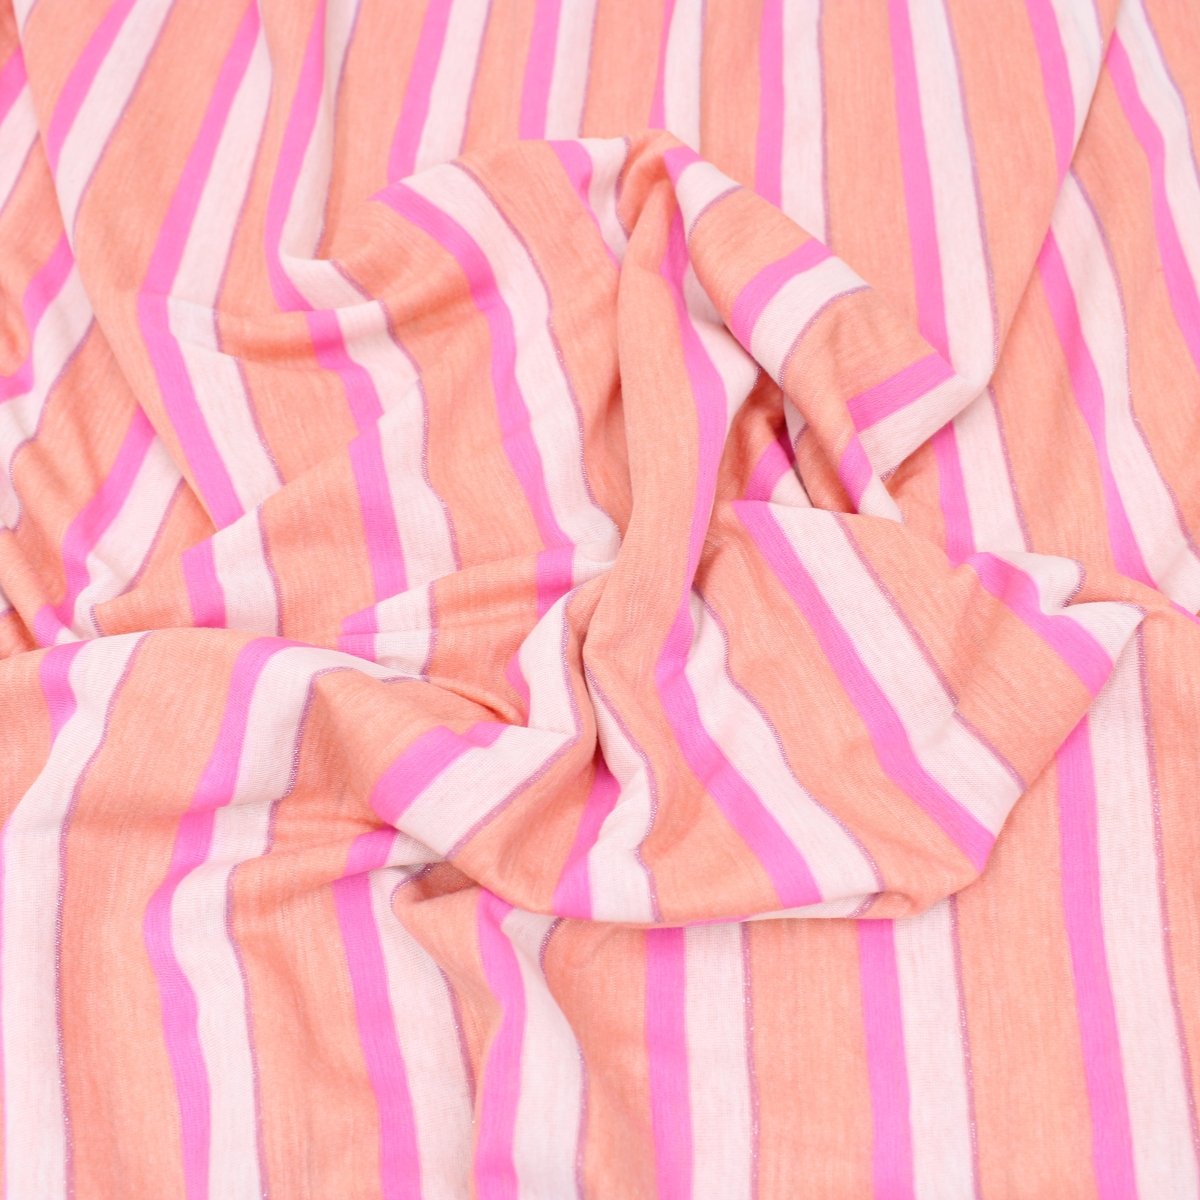 3 Metre Premium Soft Bamboo Effect Striped Jersey - 55" Wide Pink & Orange - Pound A Metre